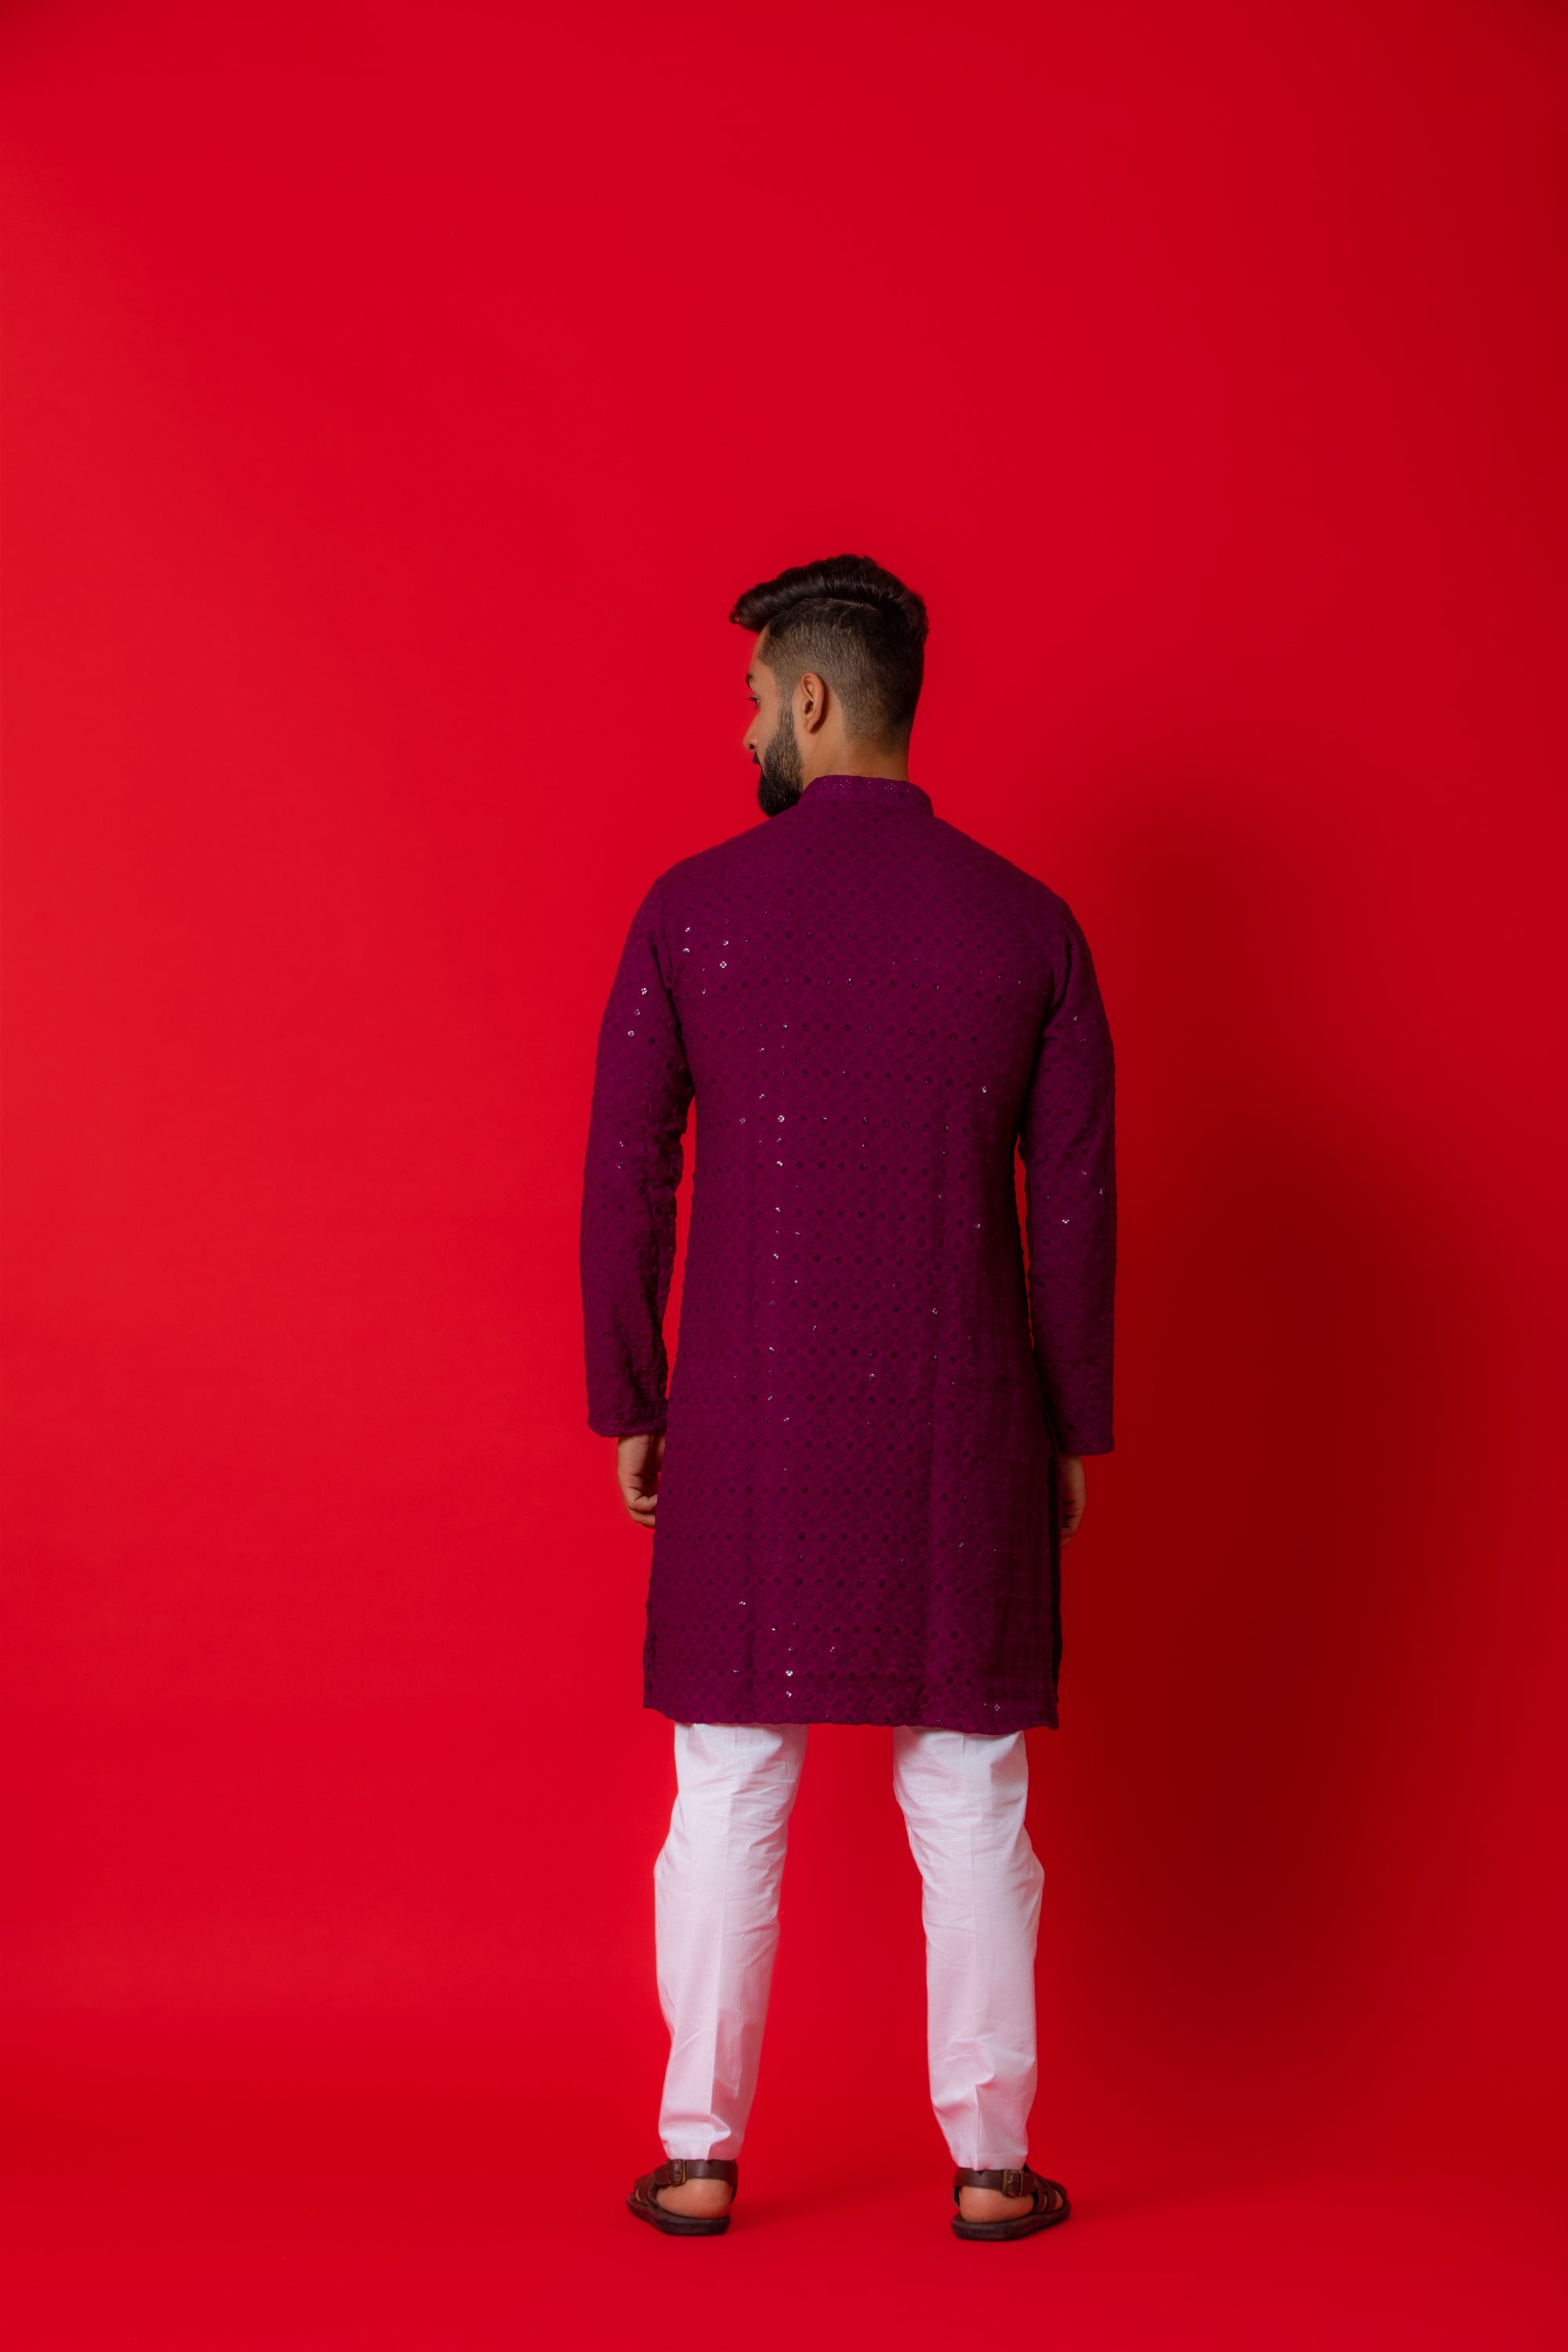 Firangi Yarn Lucknowi Lakhnavi Chikankari Sequin Work Assorted Embroidery Cotton Kurta For Men Sangria Violet Color